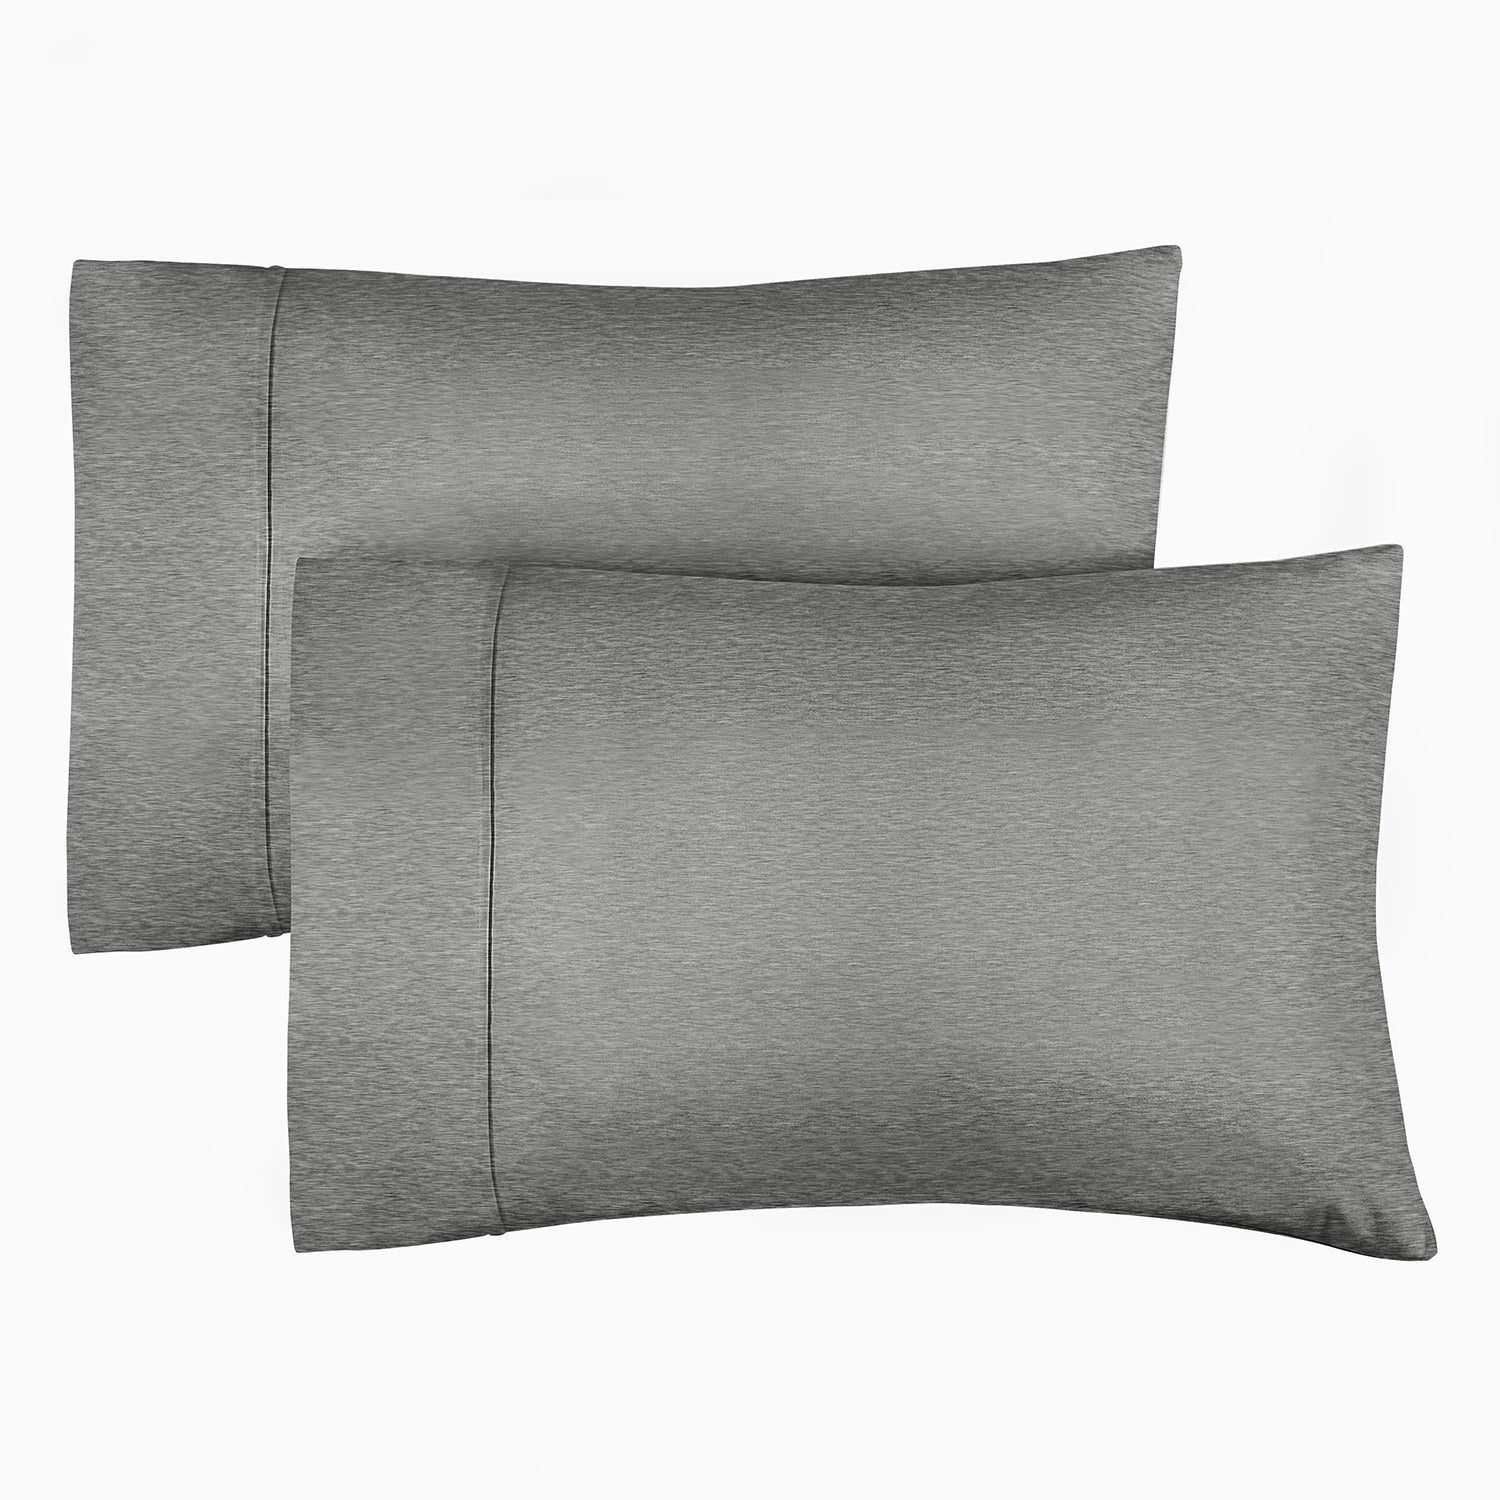 tes 2 Pillowcase Set - Heathered Grey